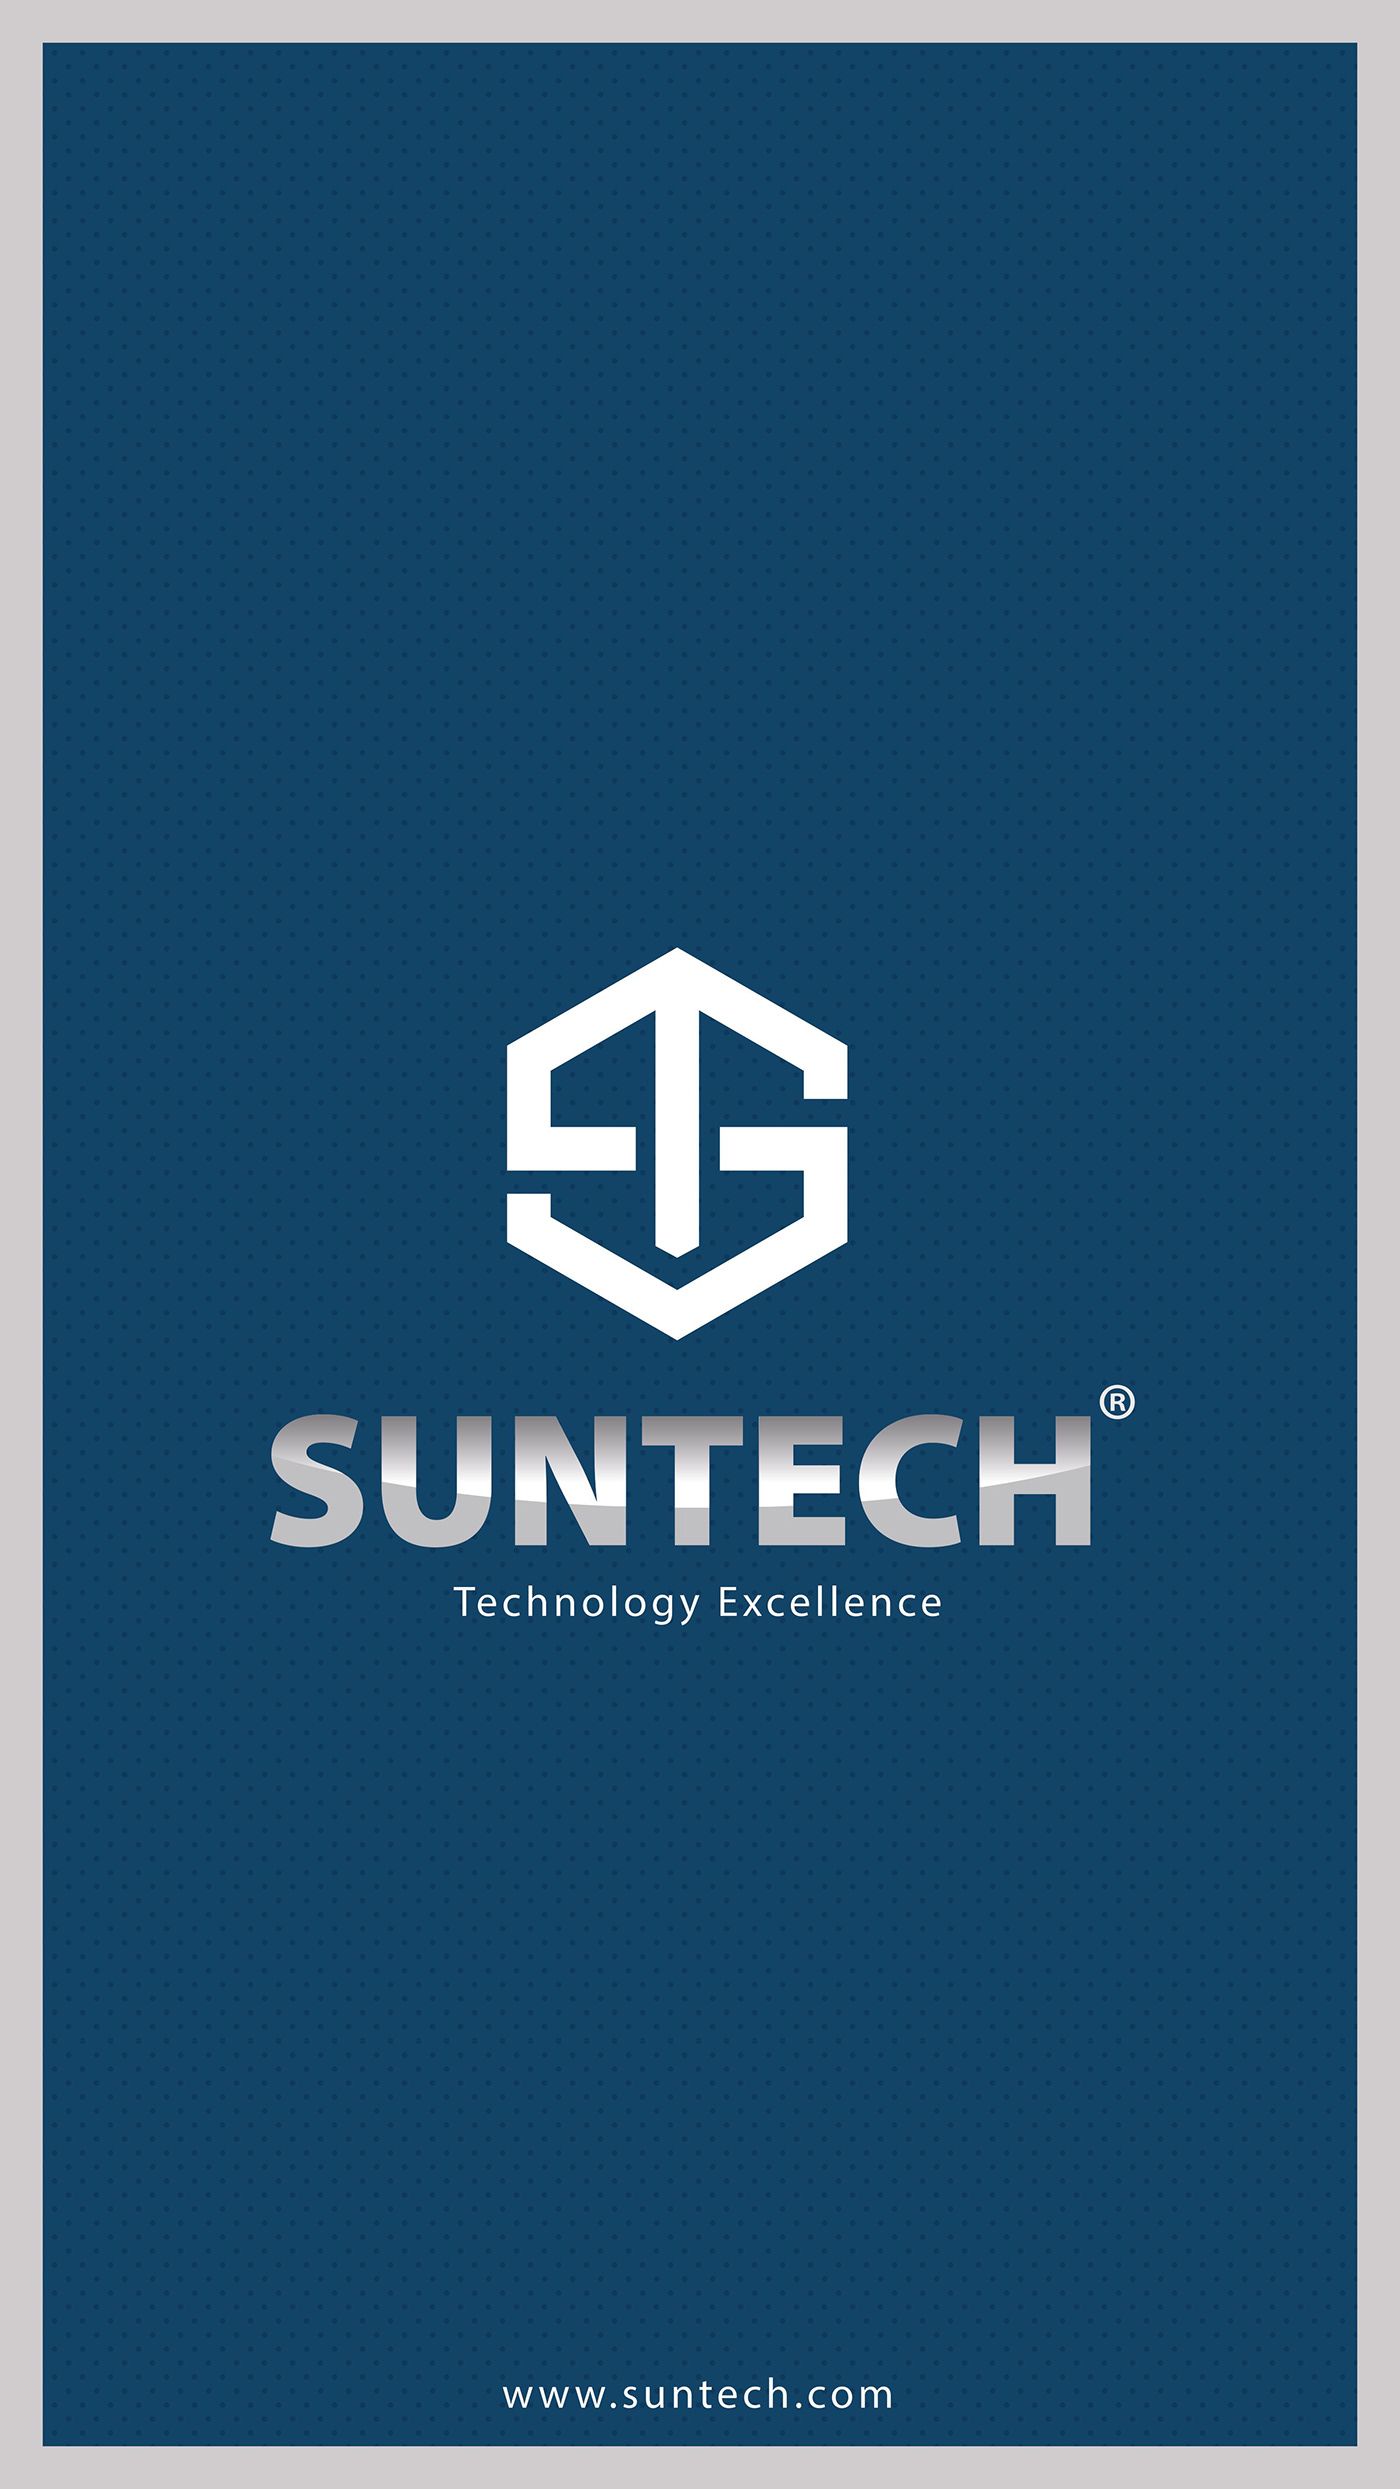 Logo Design Pet bottle logo Suntech Logo Suntech Pet bottle logo